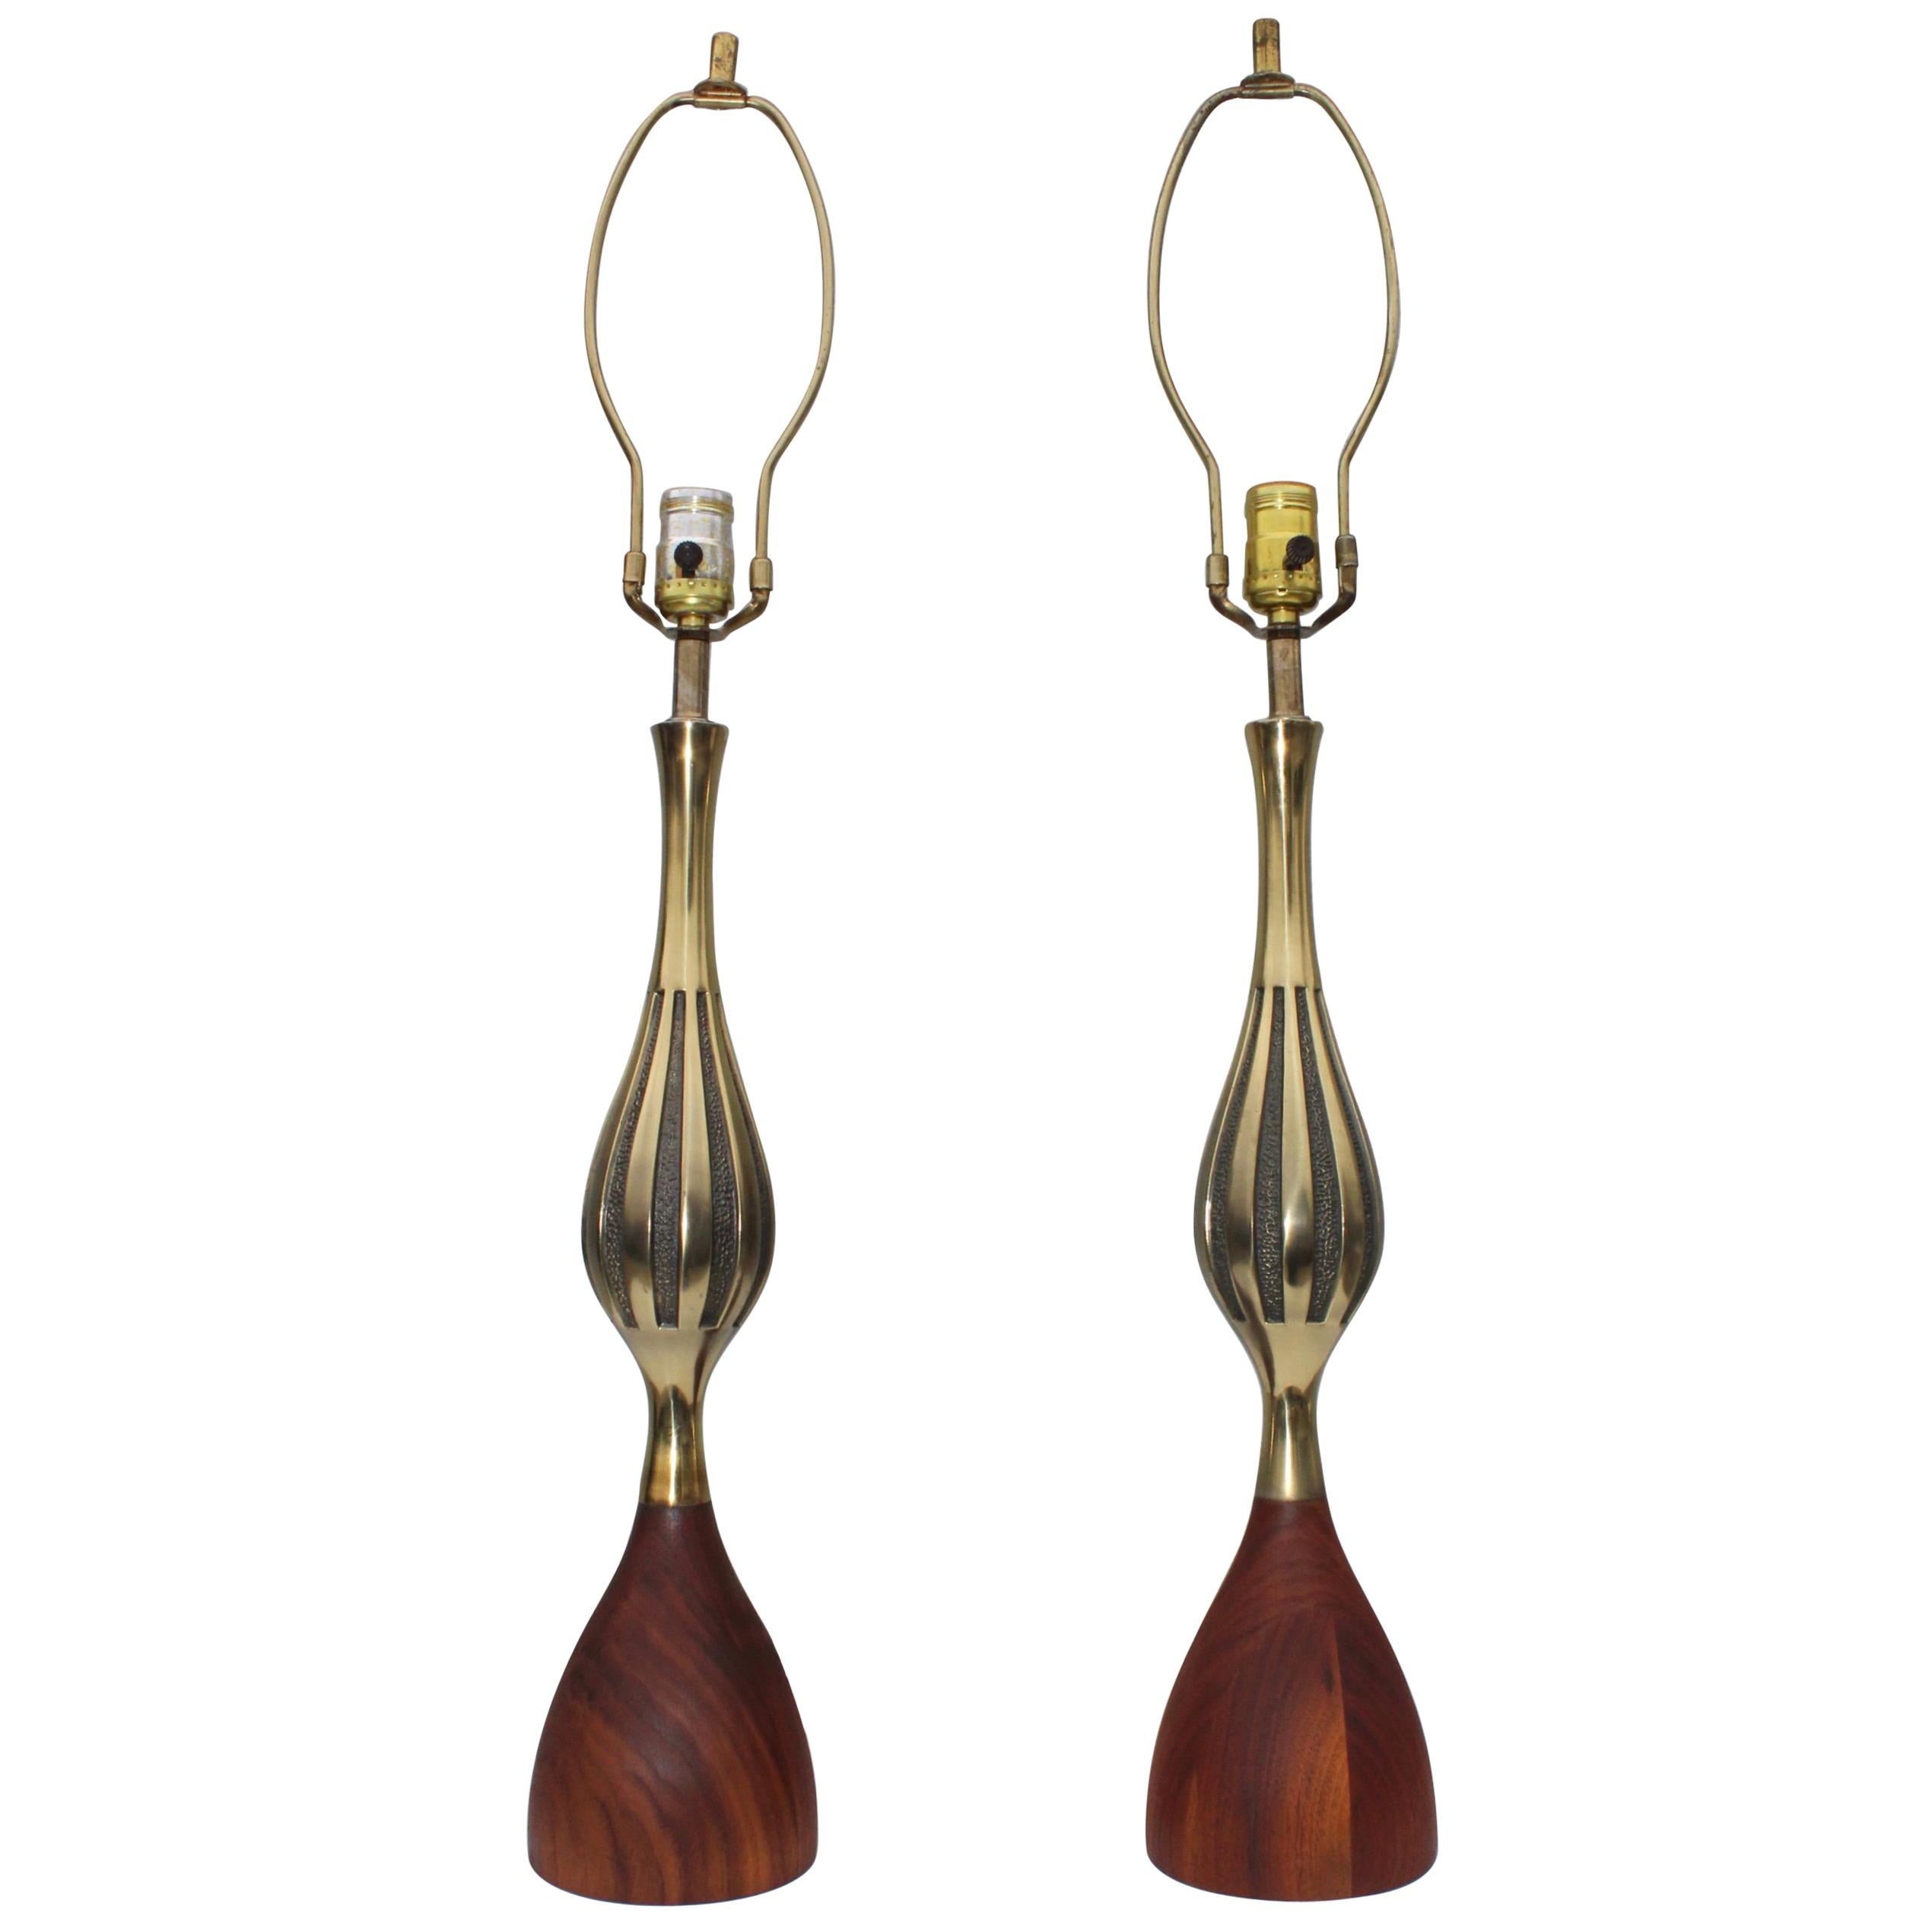 Tony Paul Mid-Century Modern Brass and Walnut Table Lamps